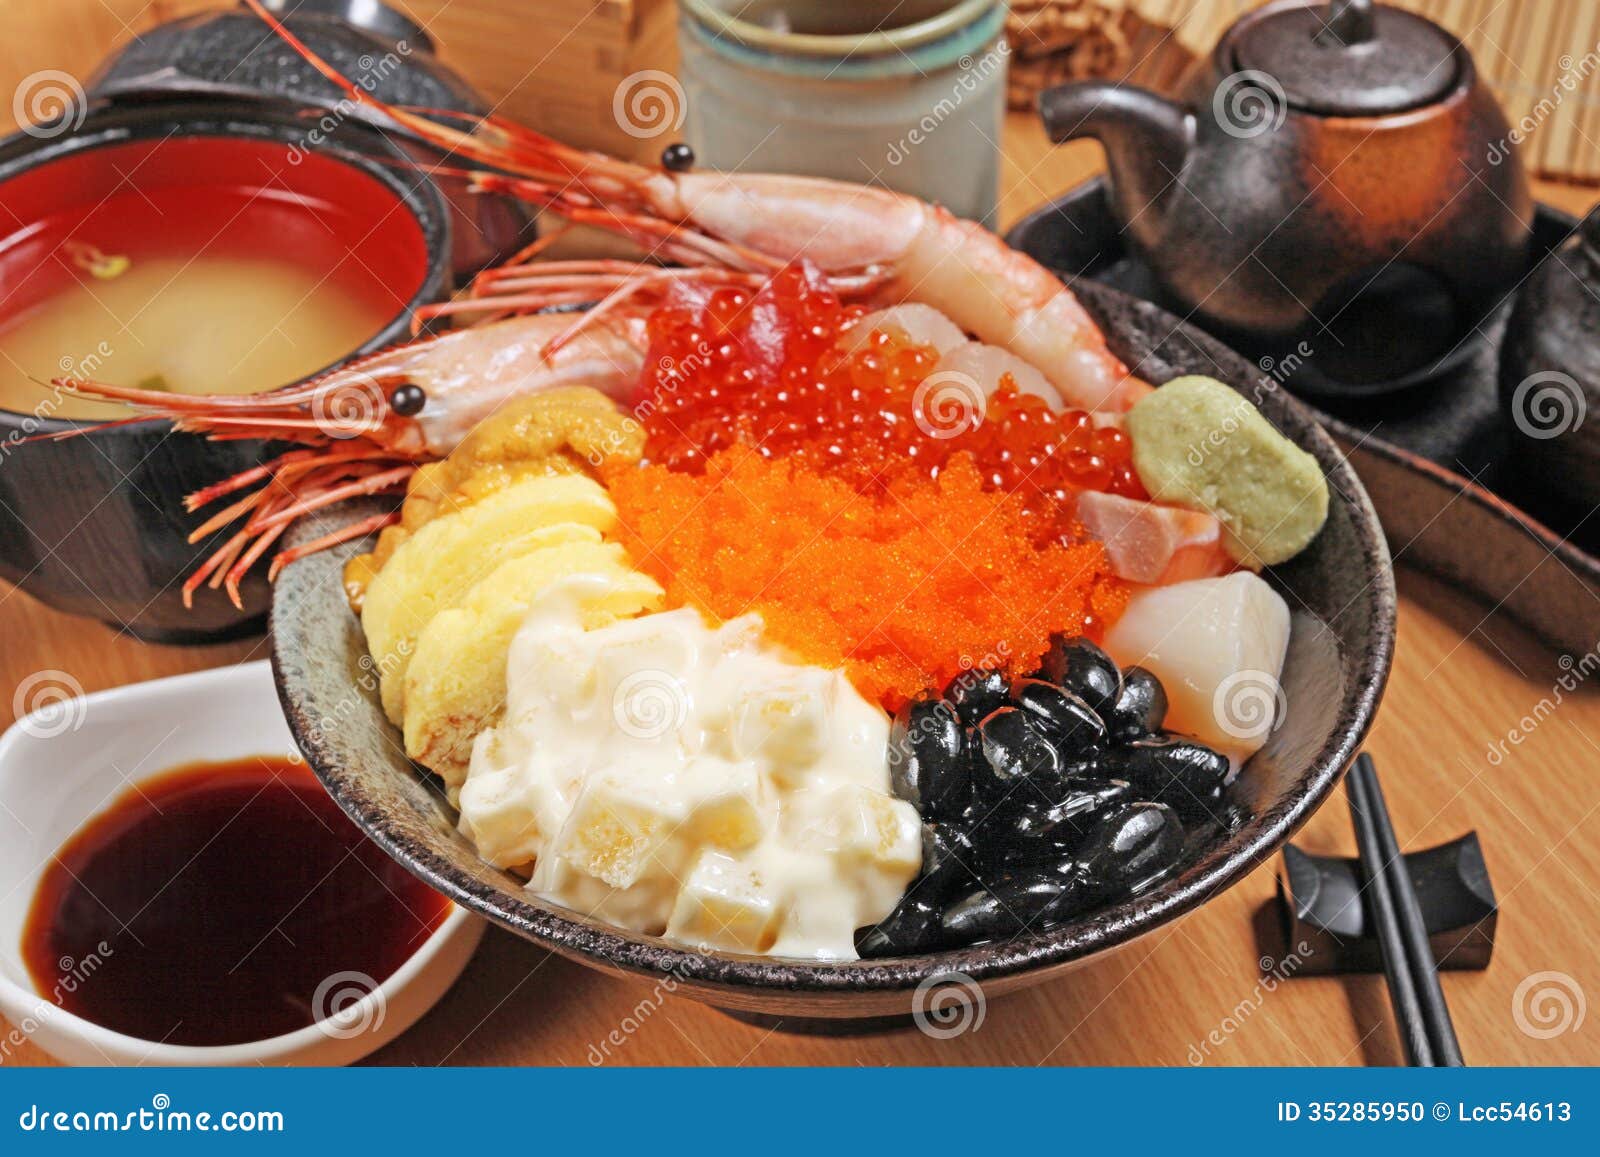 Seafood rice bowl stock photo. Image of tasty, shrimp - 35285950